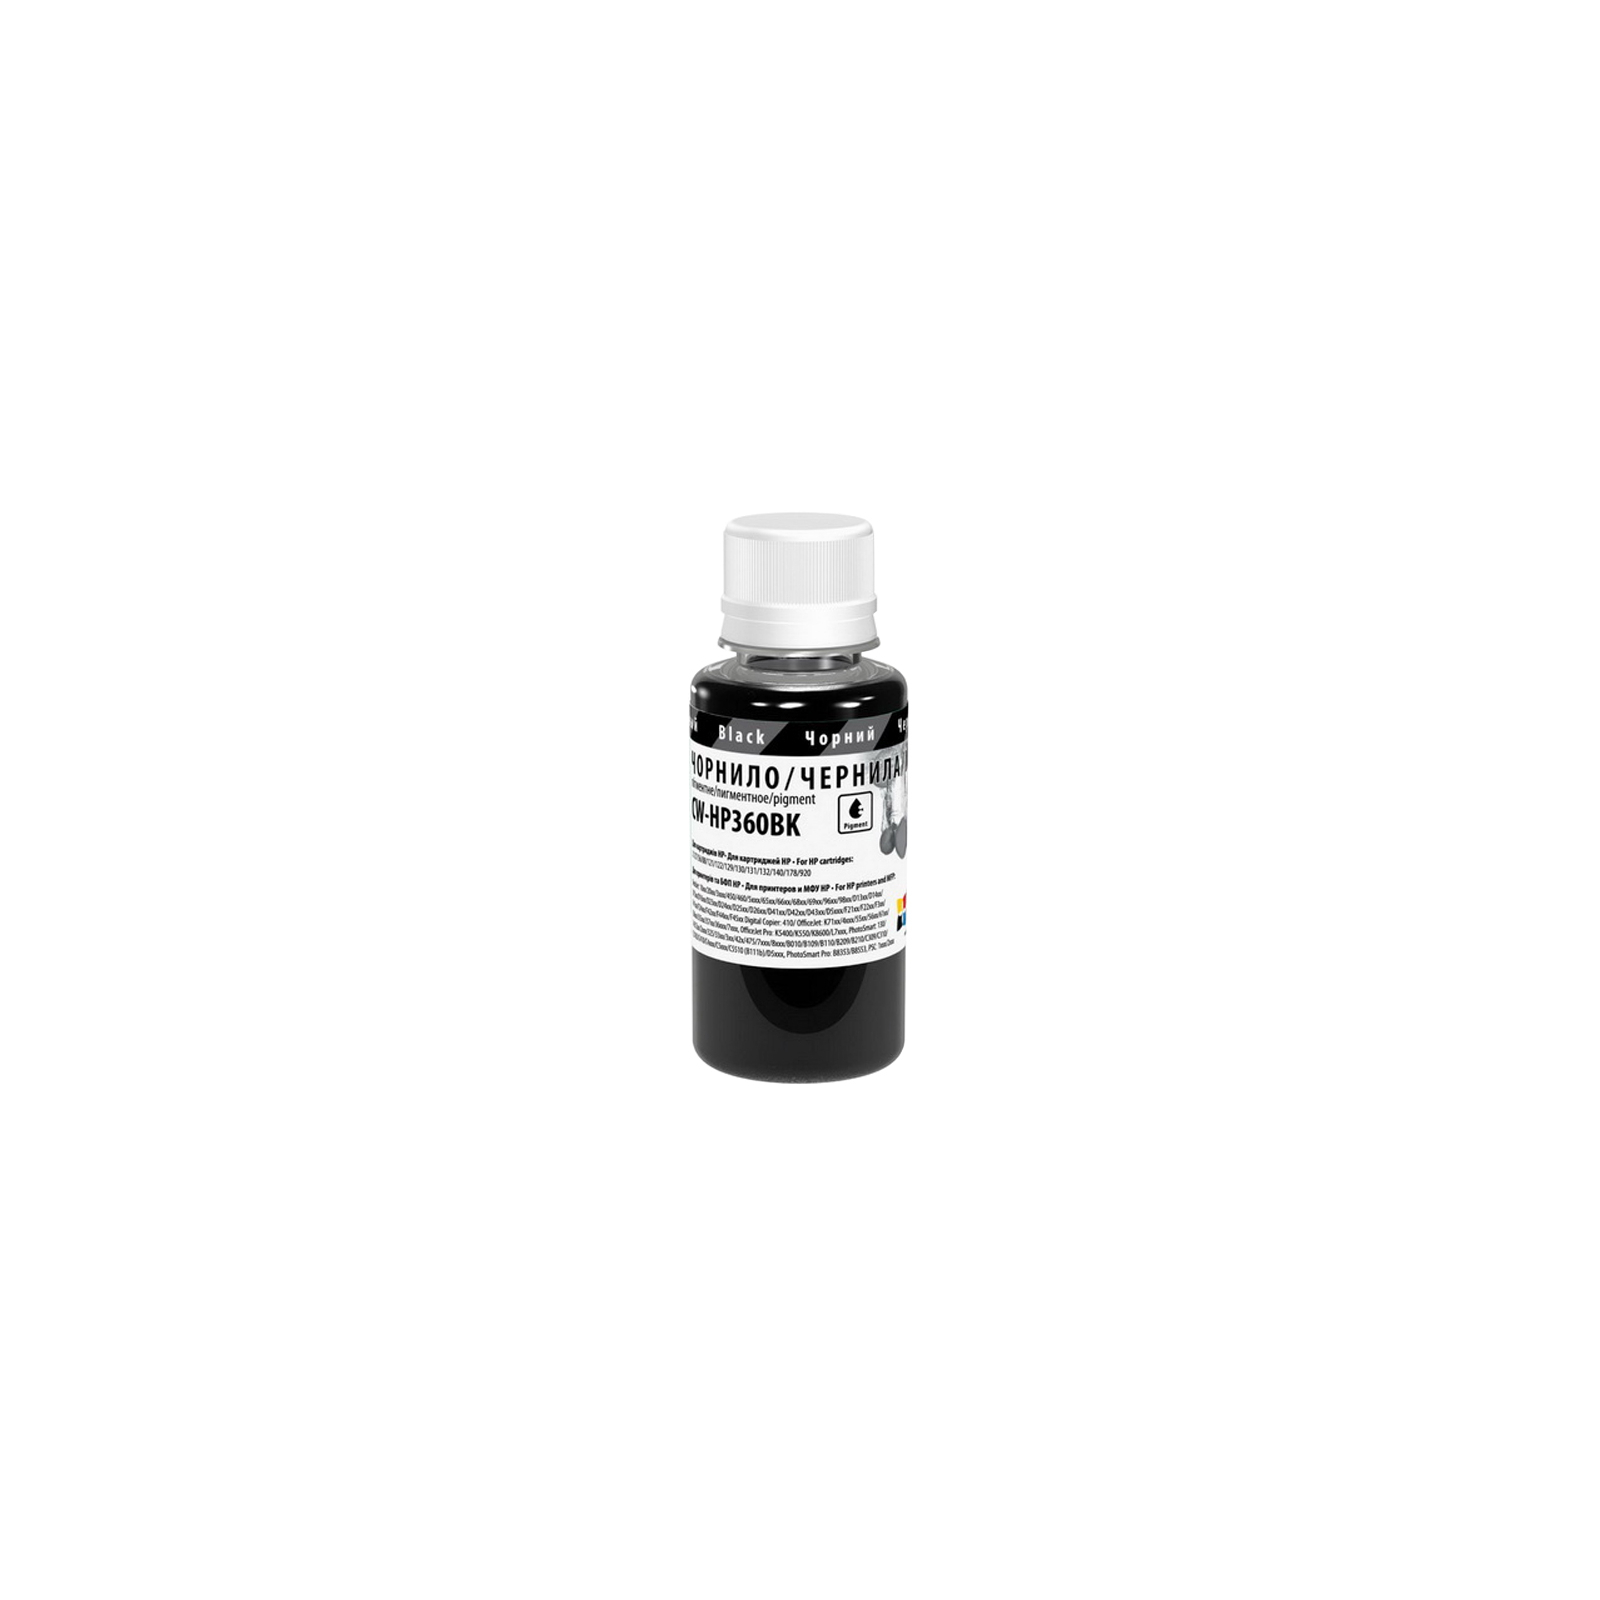 Чернила ColorWay HP №121/129 black pigment (CW-HP360BK01)